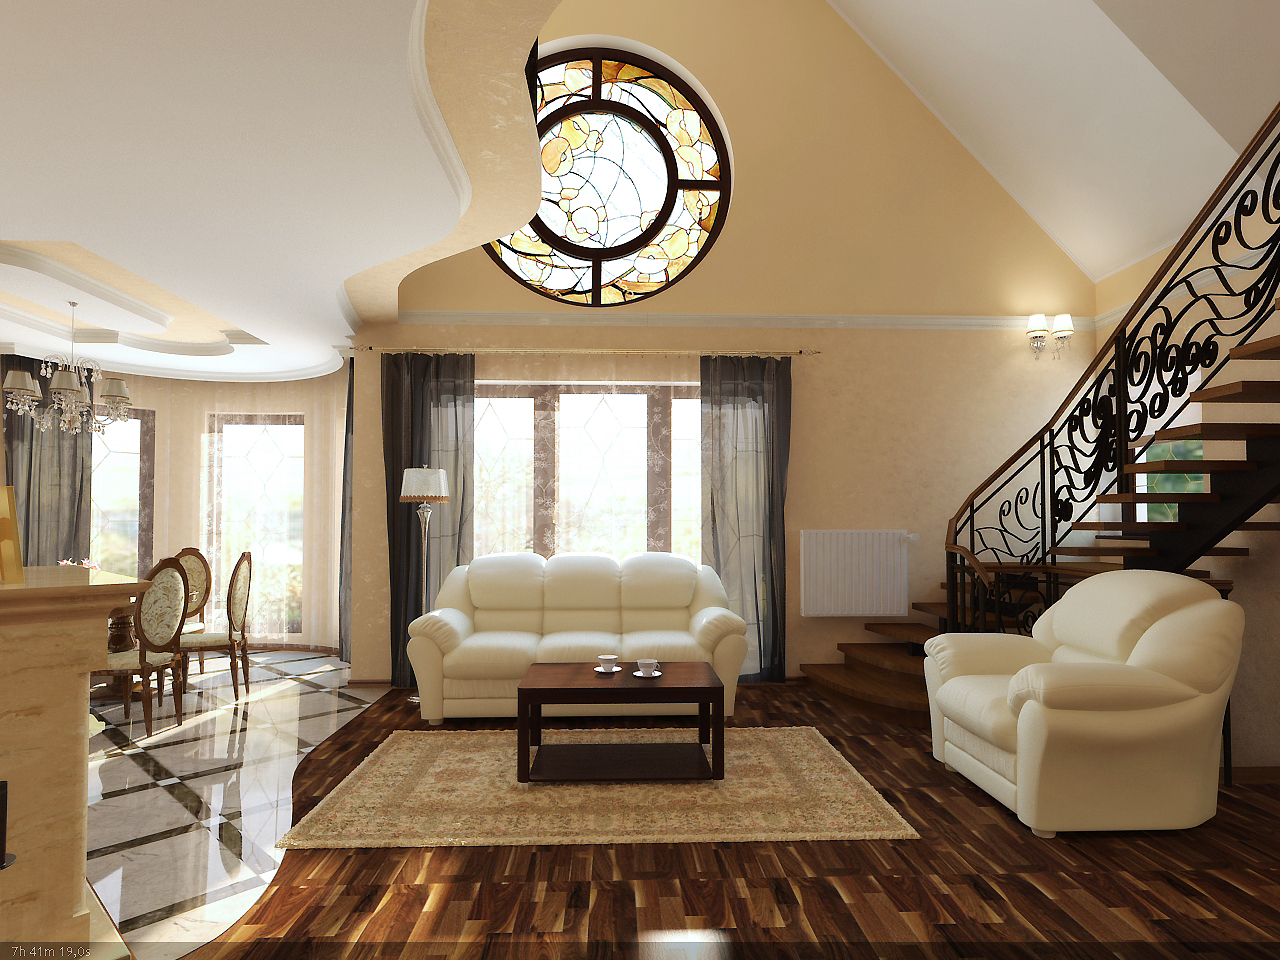 Classic interior design with Victorian-style furniture